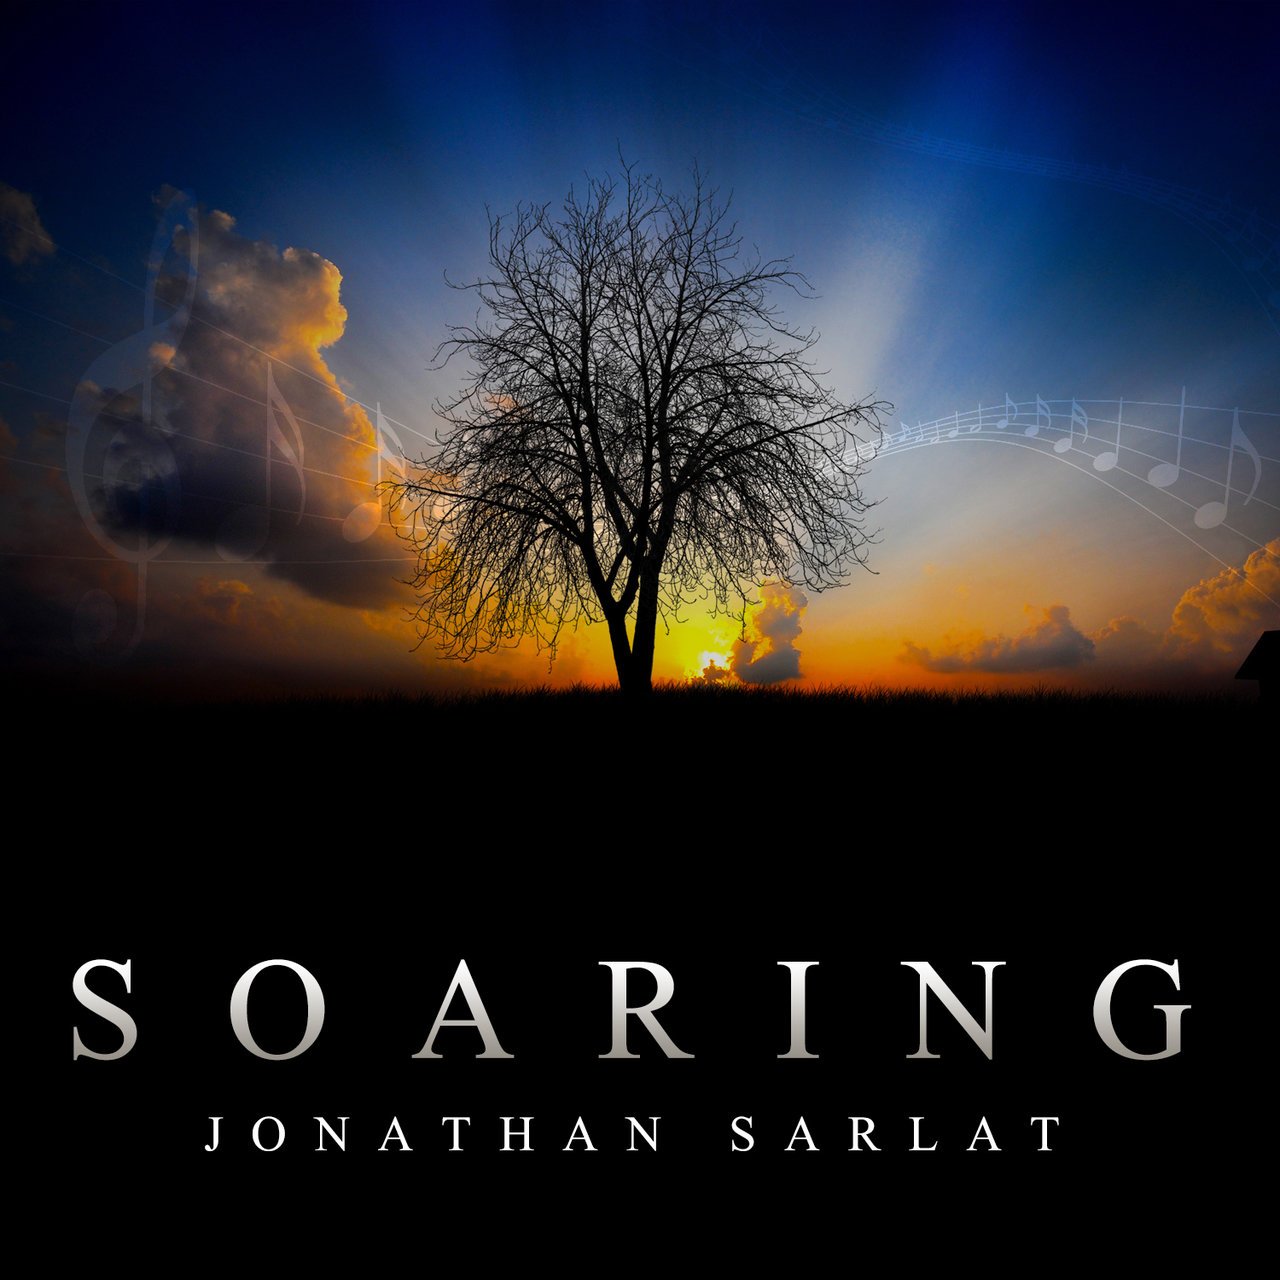 Jonathan Sarlat